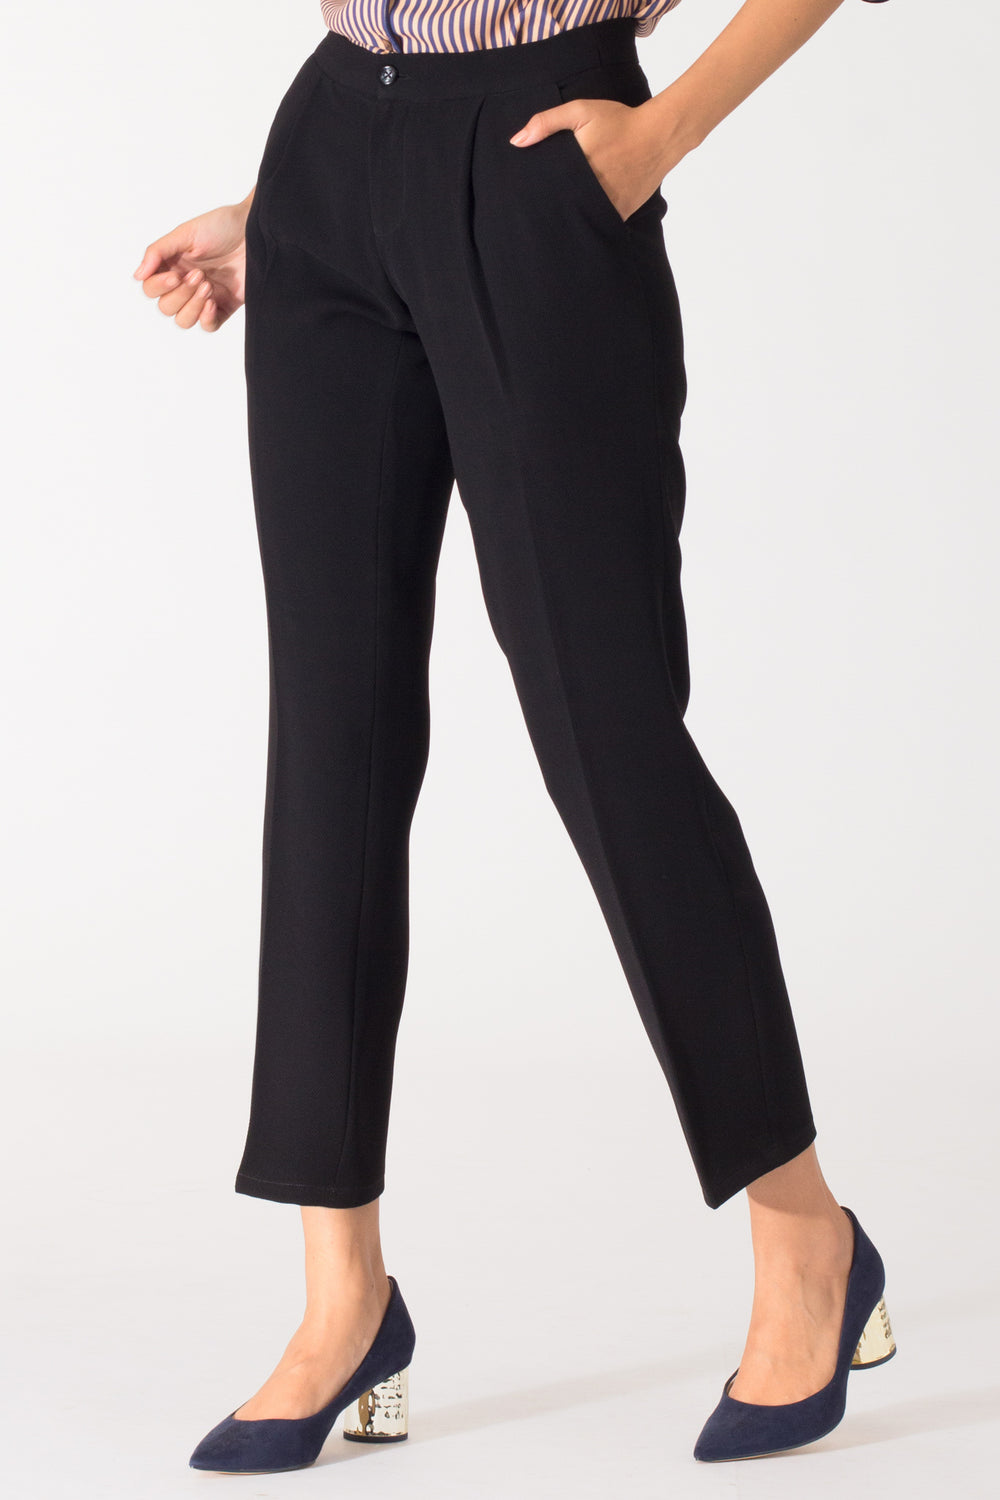 Smarty Pants women's cotton lycra ankle length grey formal trouser